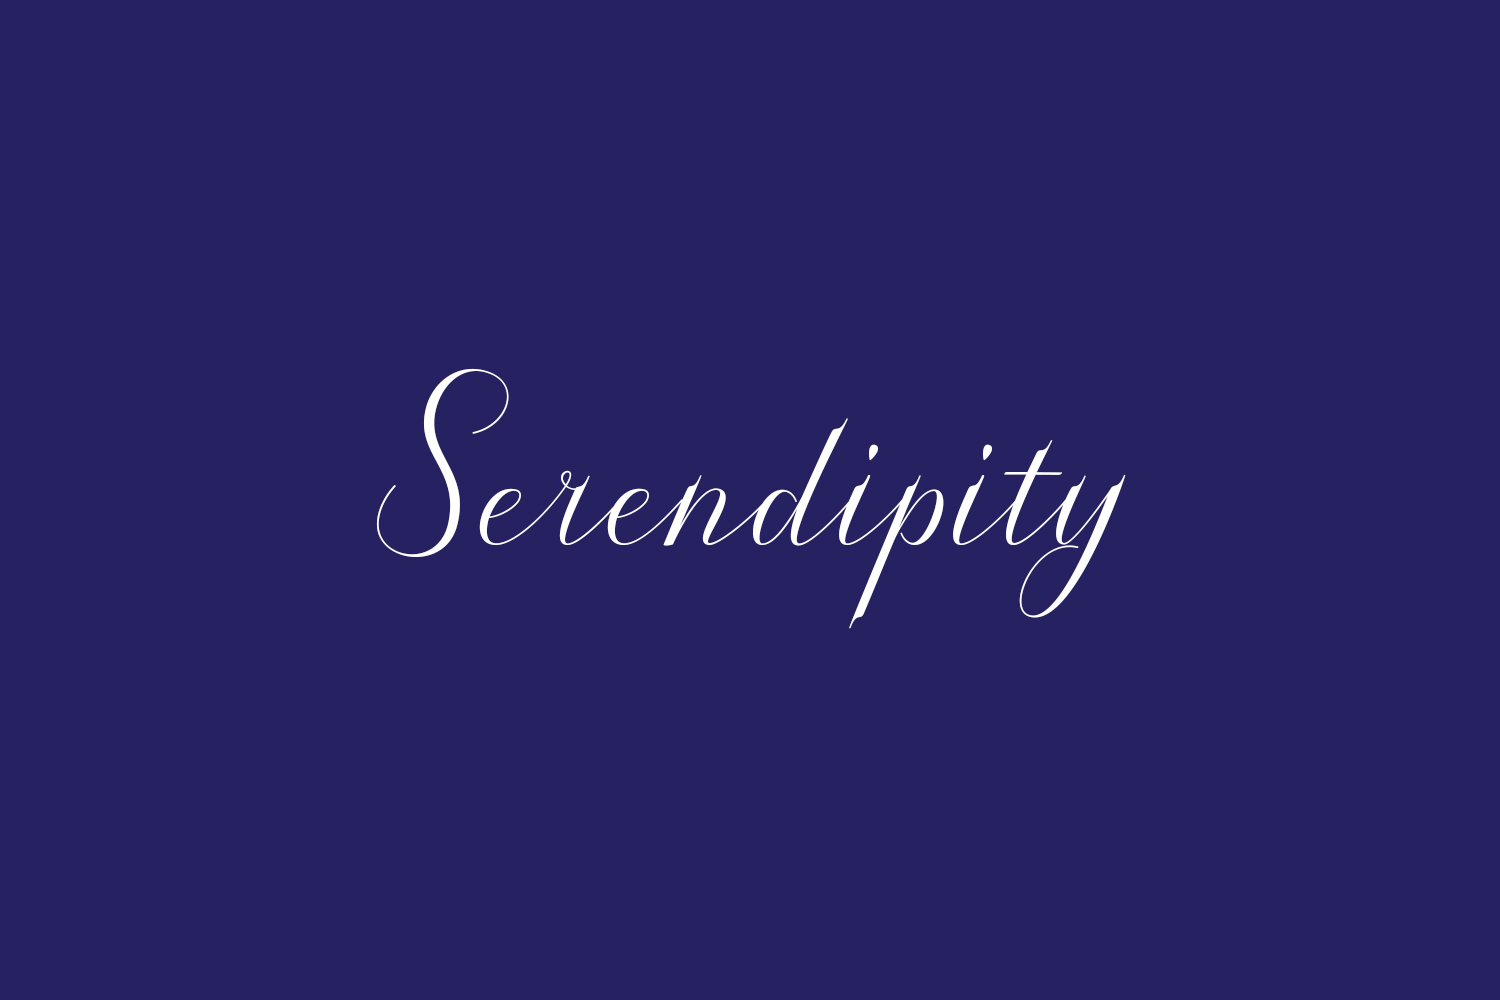 Serendipity Free Font